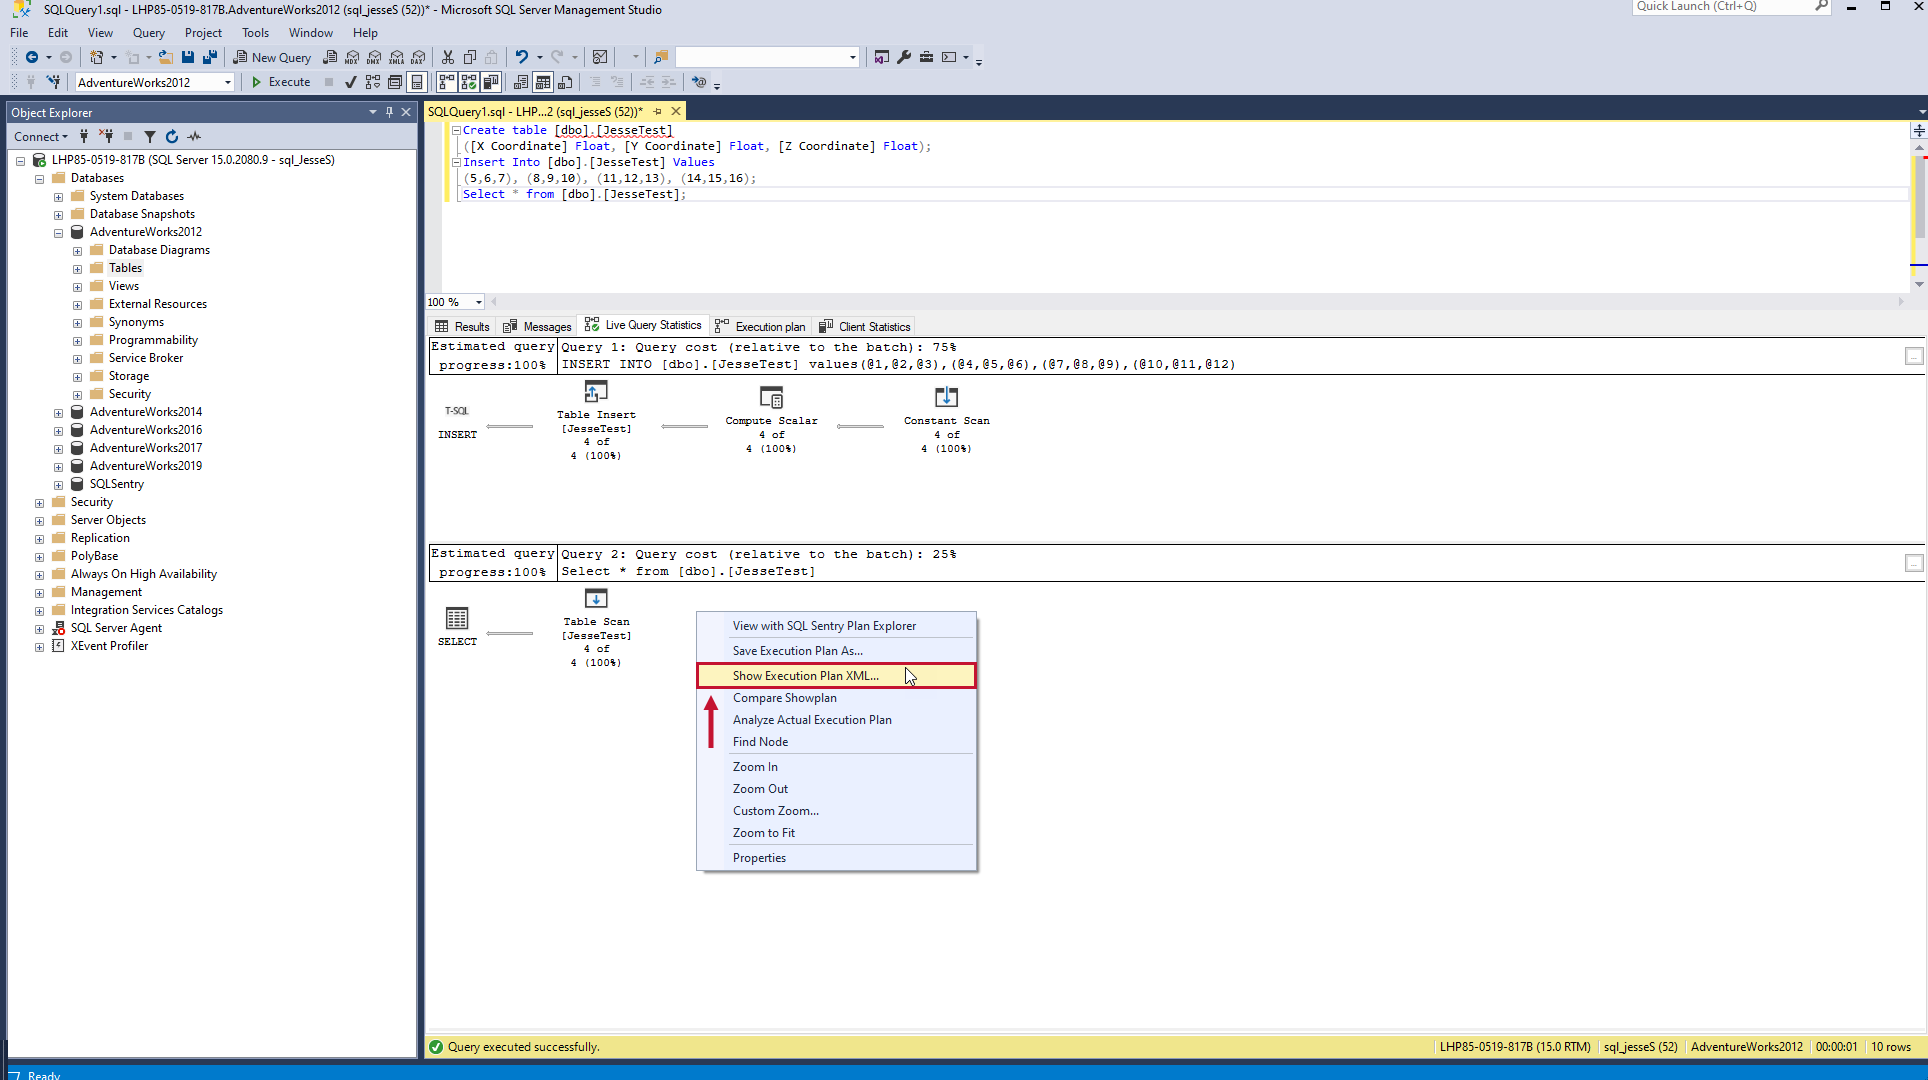 SQL Sentry Plan Explorer SSMS Show Execution Plan XML context menu